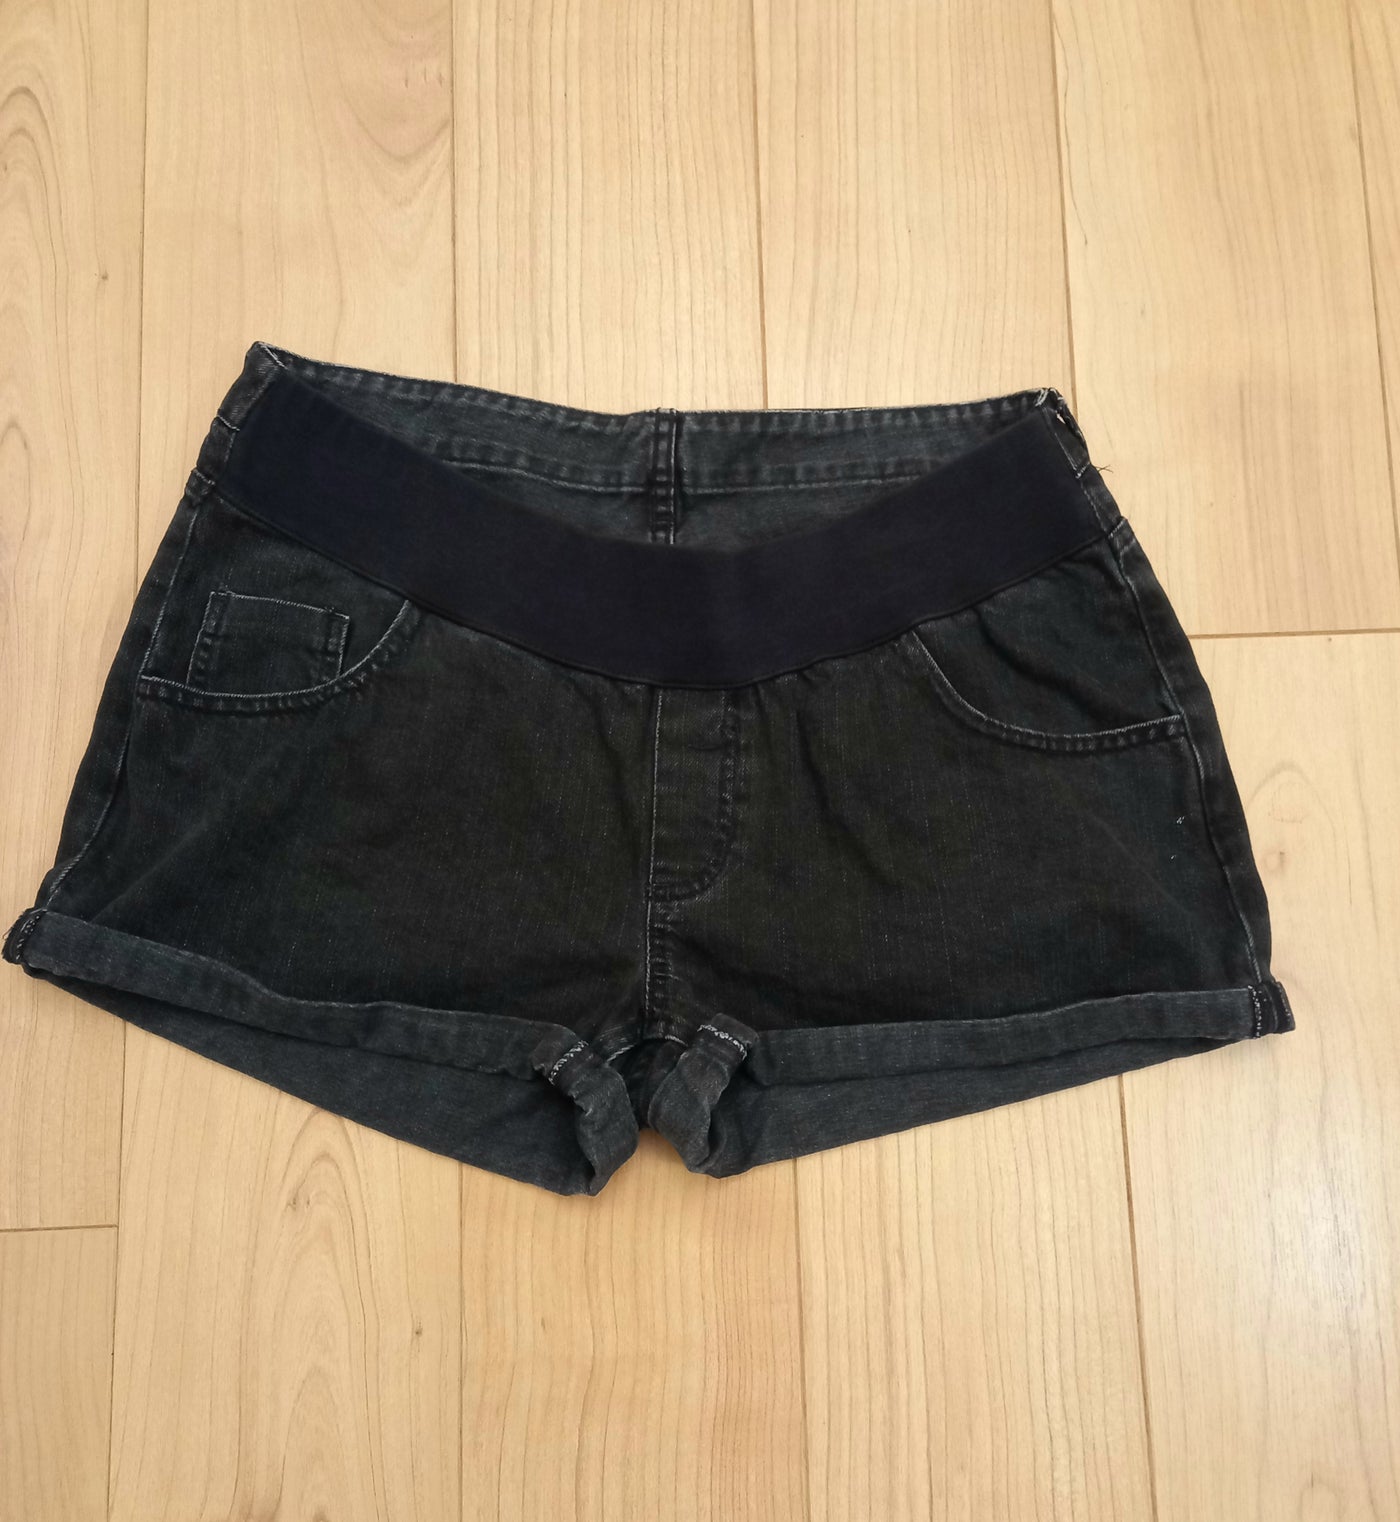 Asos Maternity Black Denim Underbump Shorts - Size 14